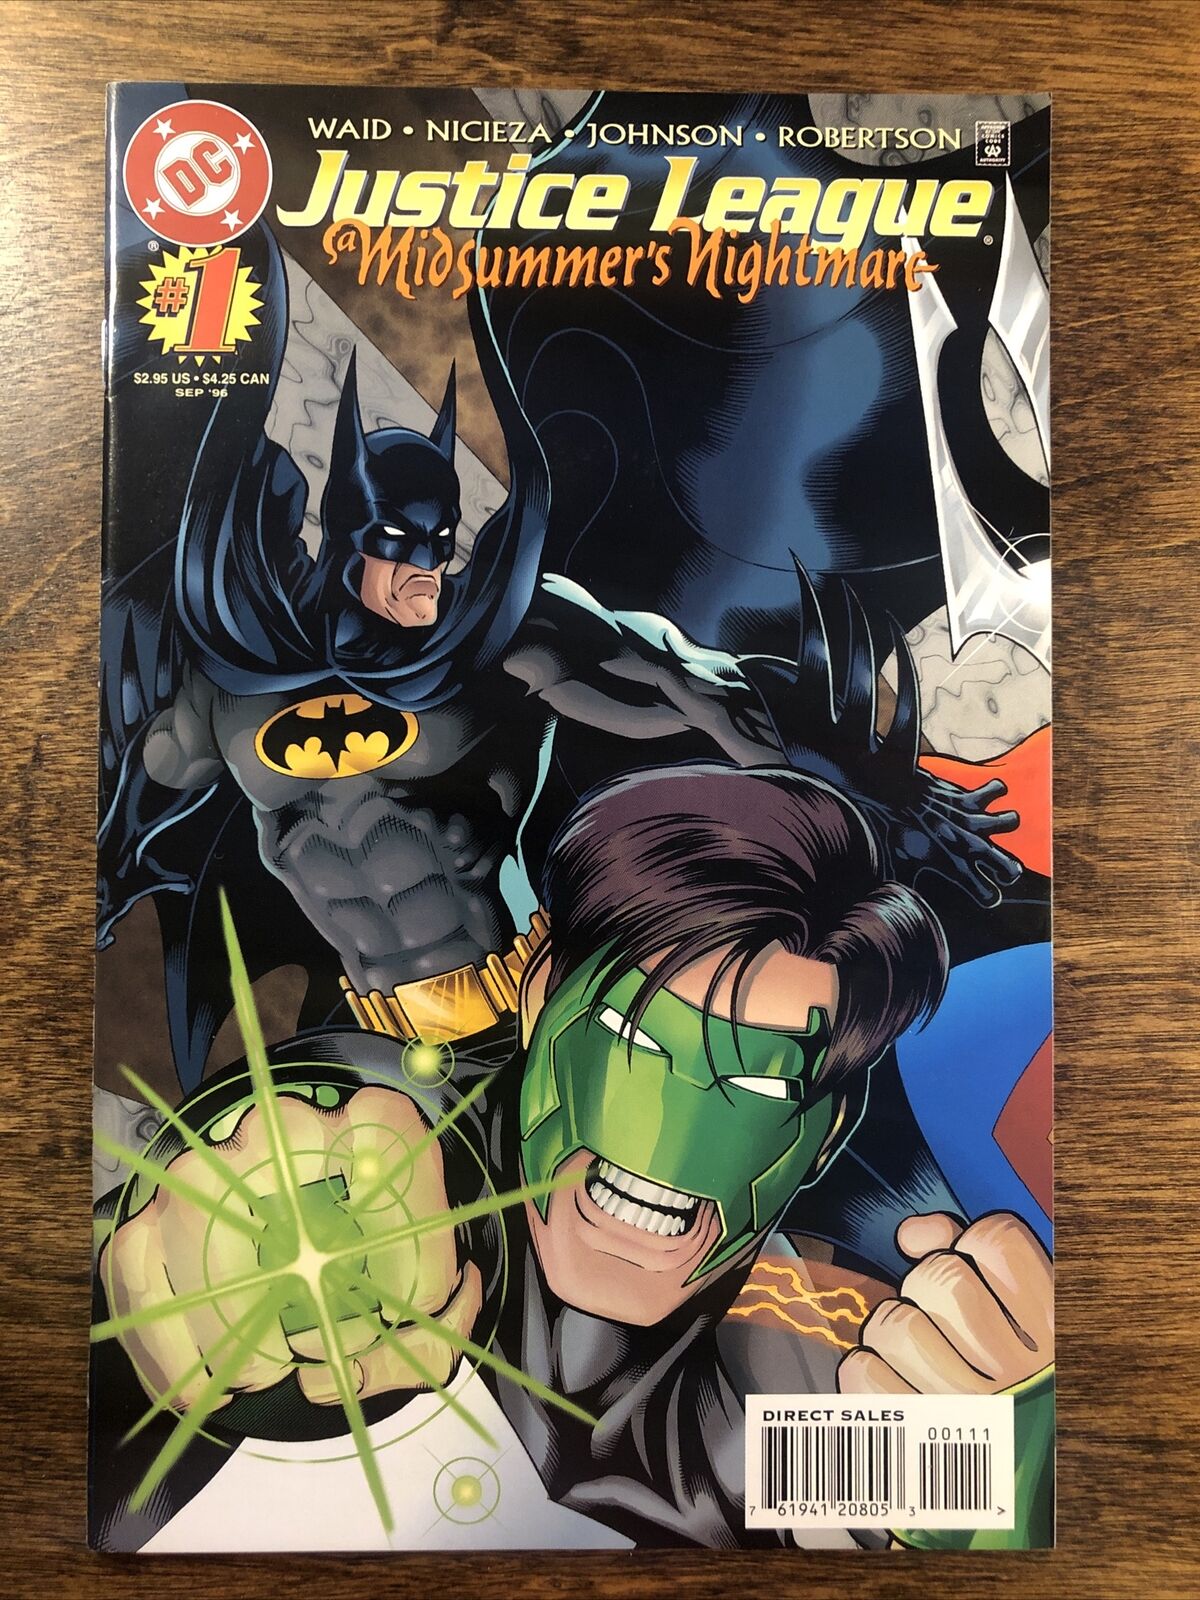 Justice League A Midsummer's Nightmare #1 Comic 1996 DC Waid Nicieza